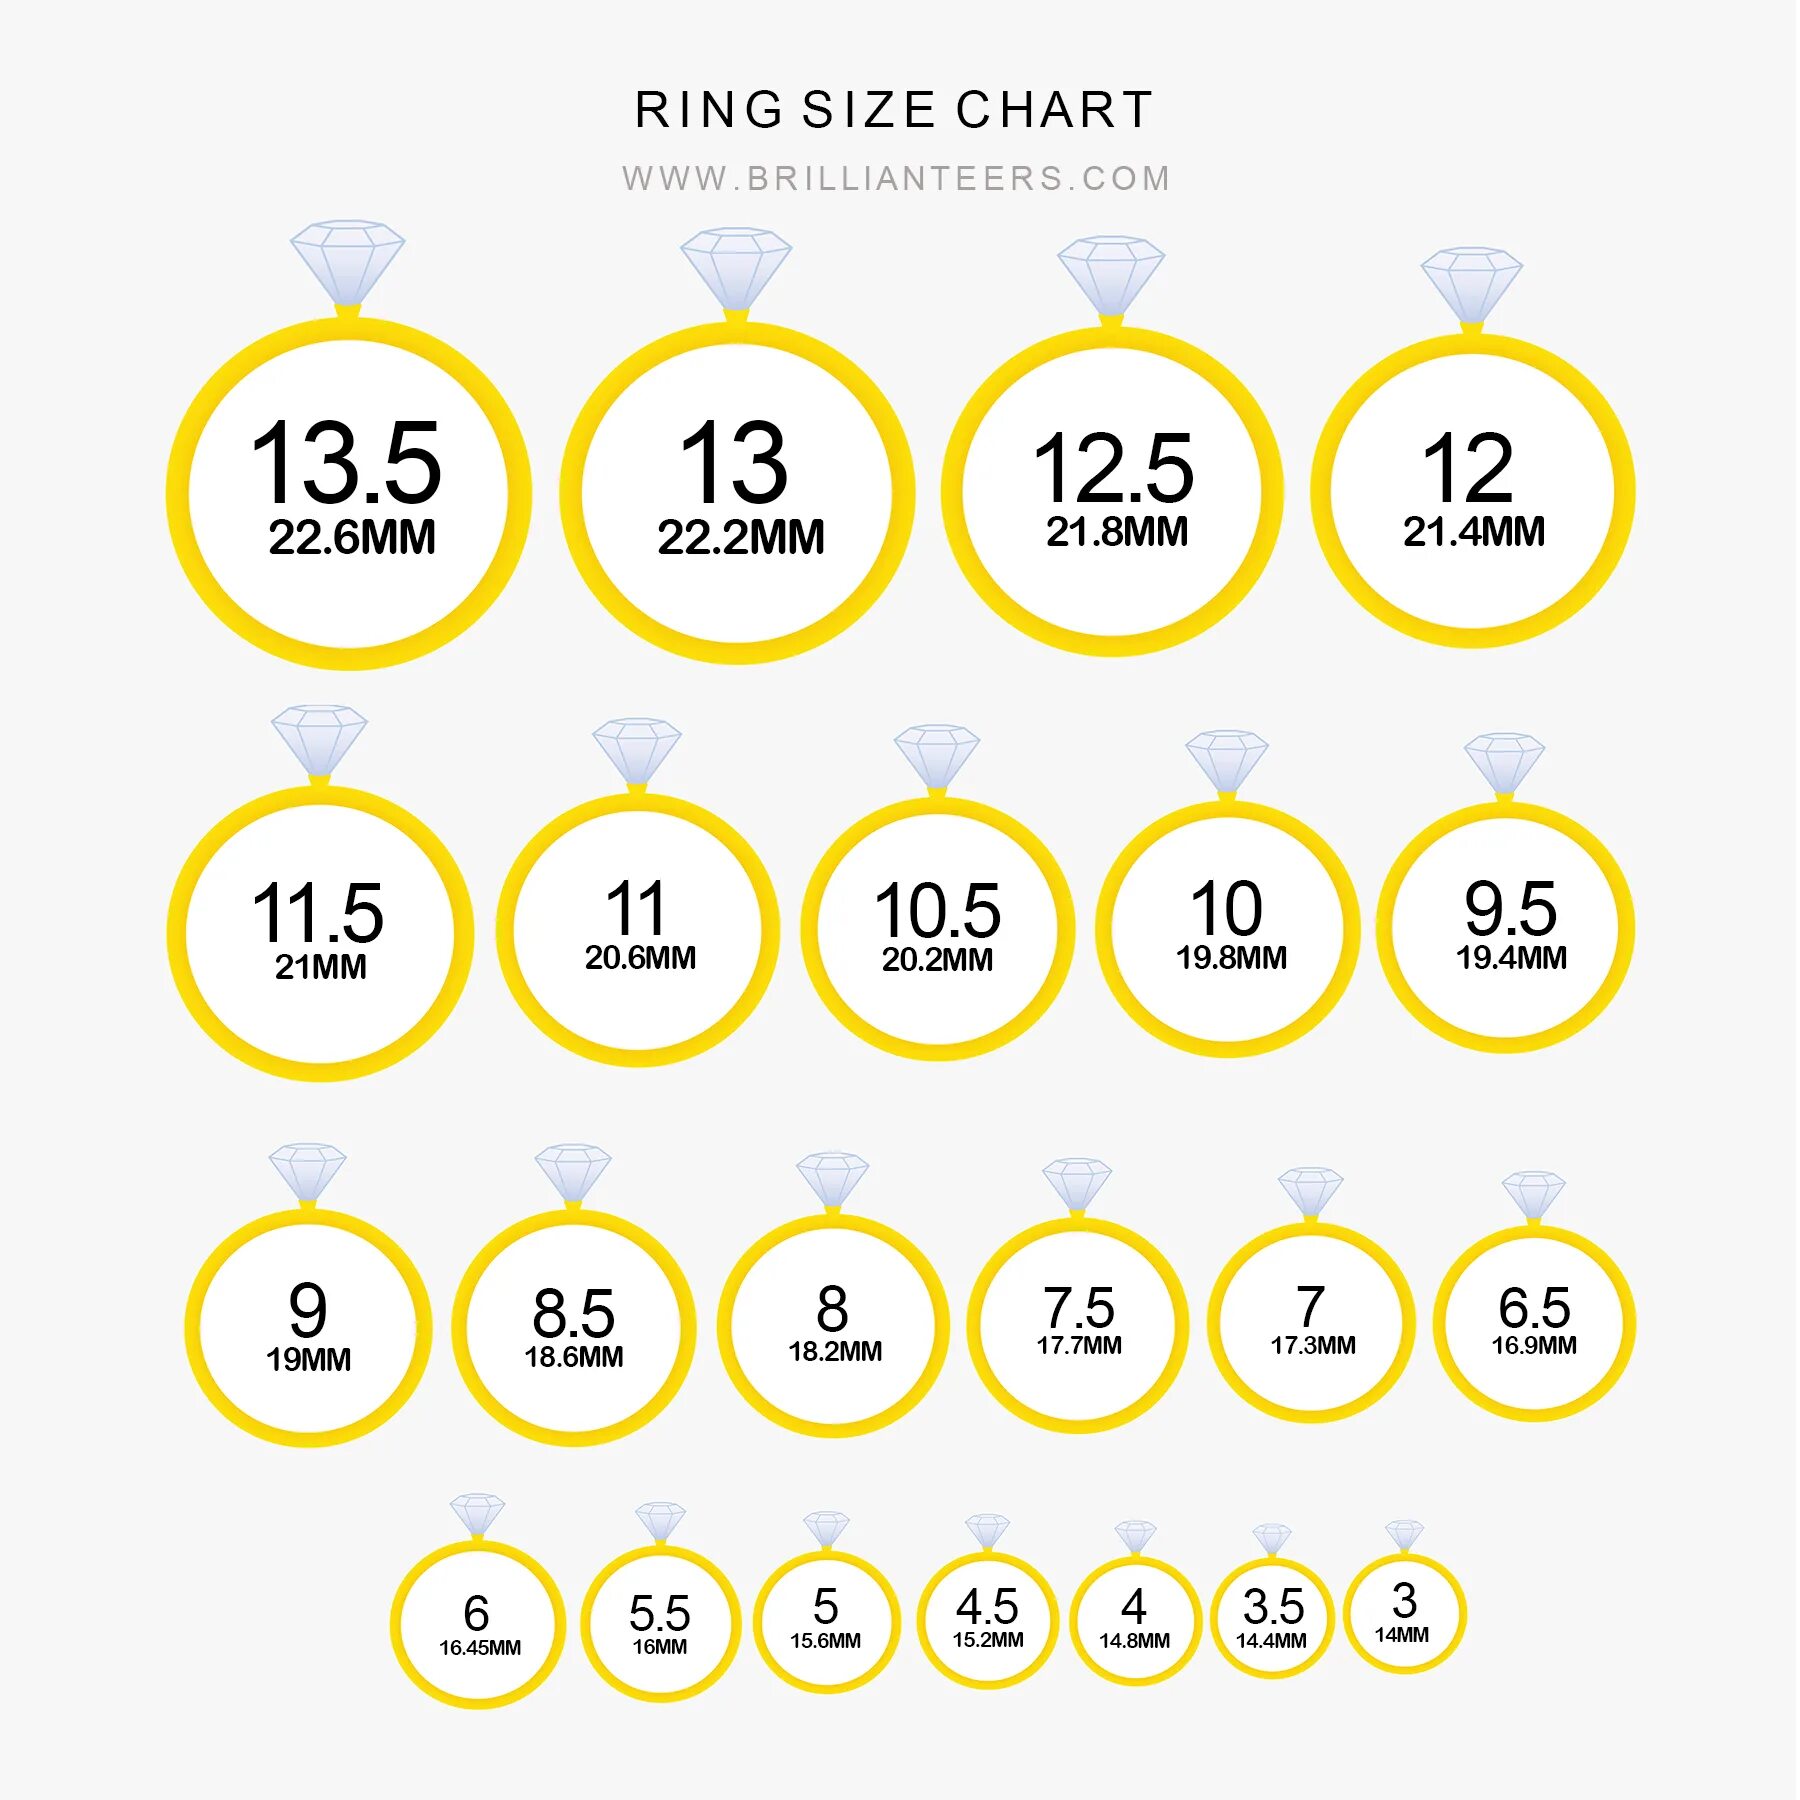 I 6 size. 6 Мм размер кольца. 6 Мм кольцо размер диаметр. Размер кольца диаметр 21.3 мм. 7 Мм в диаметре размер кольца.